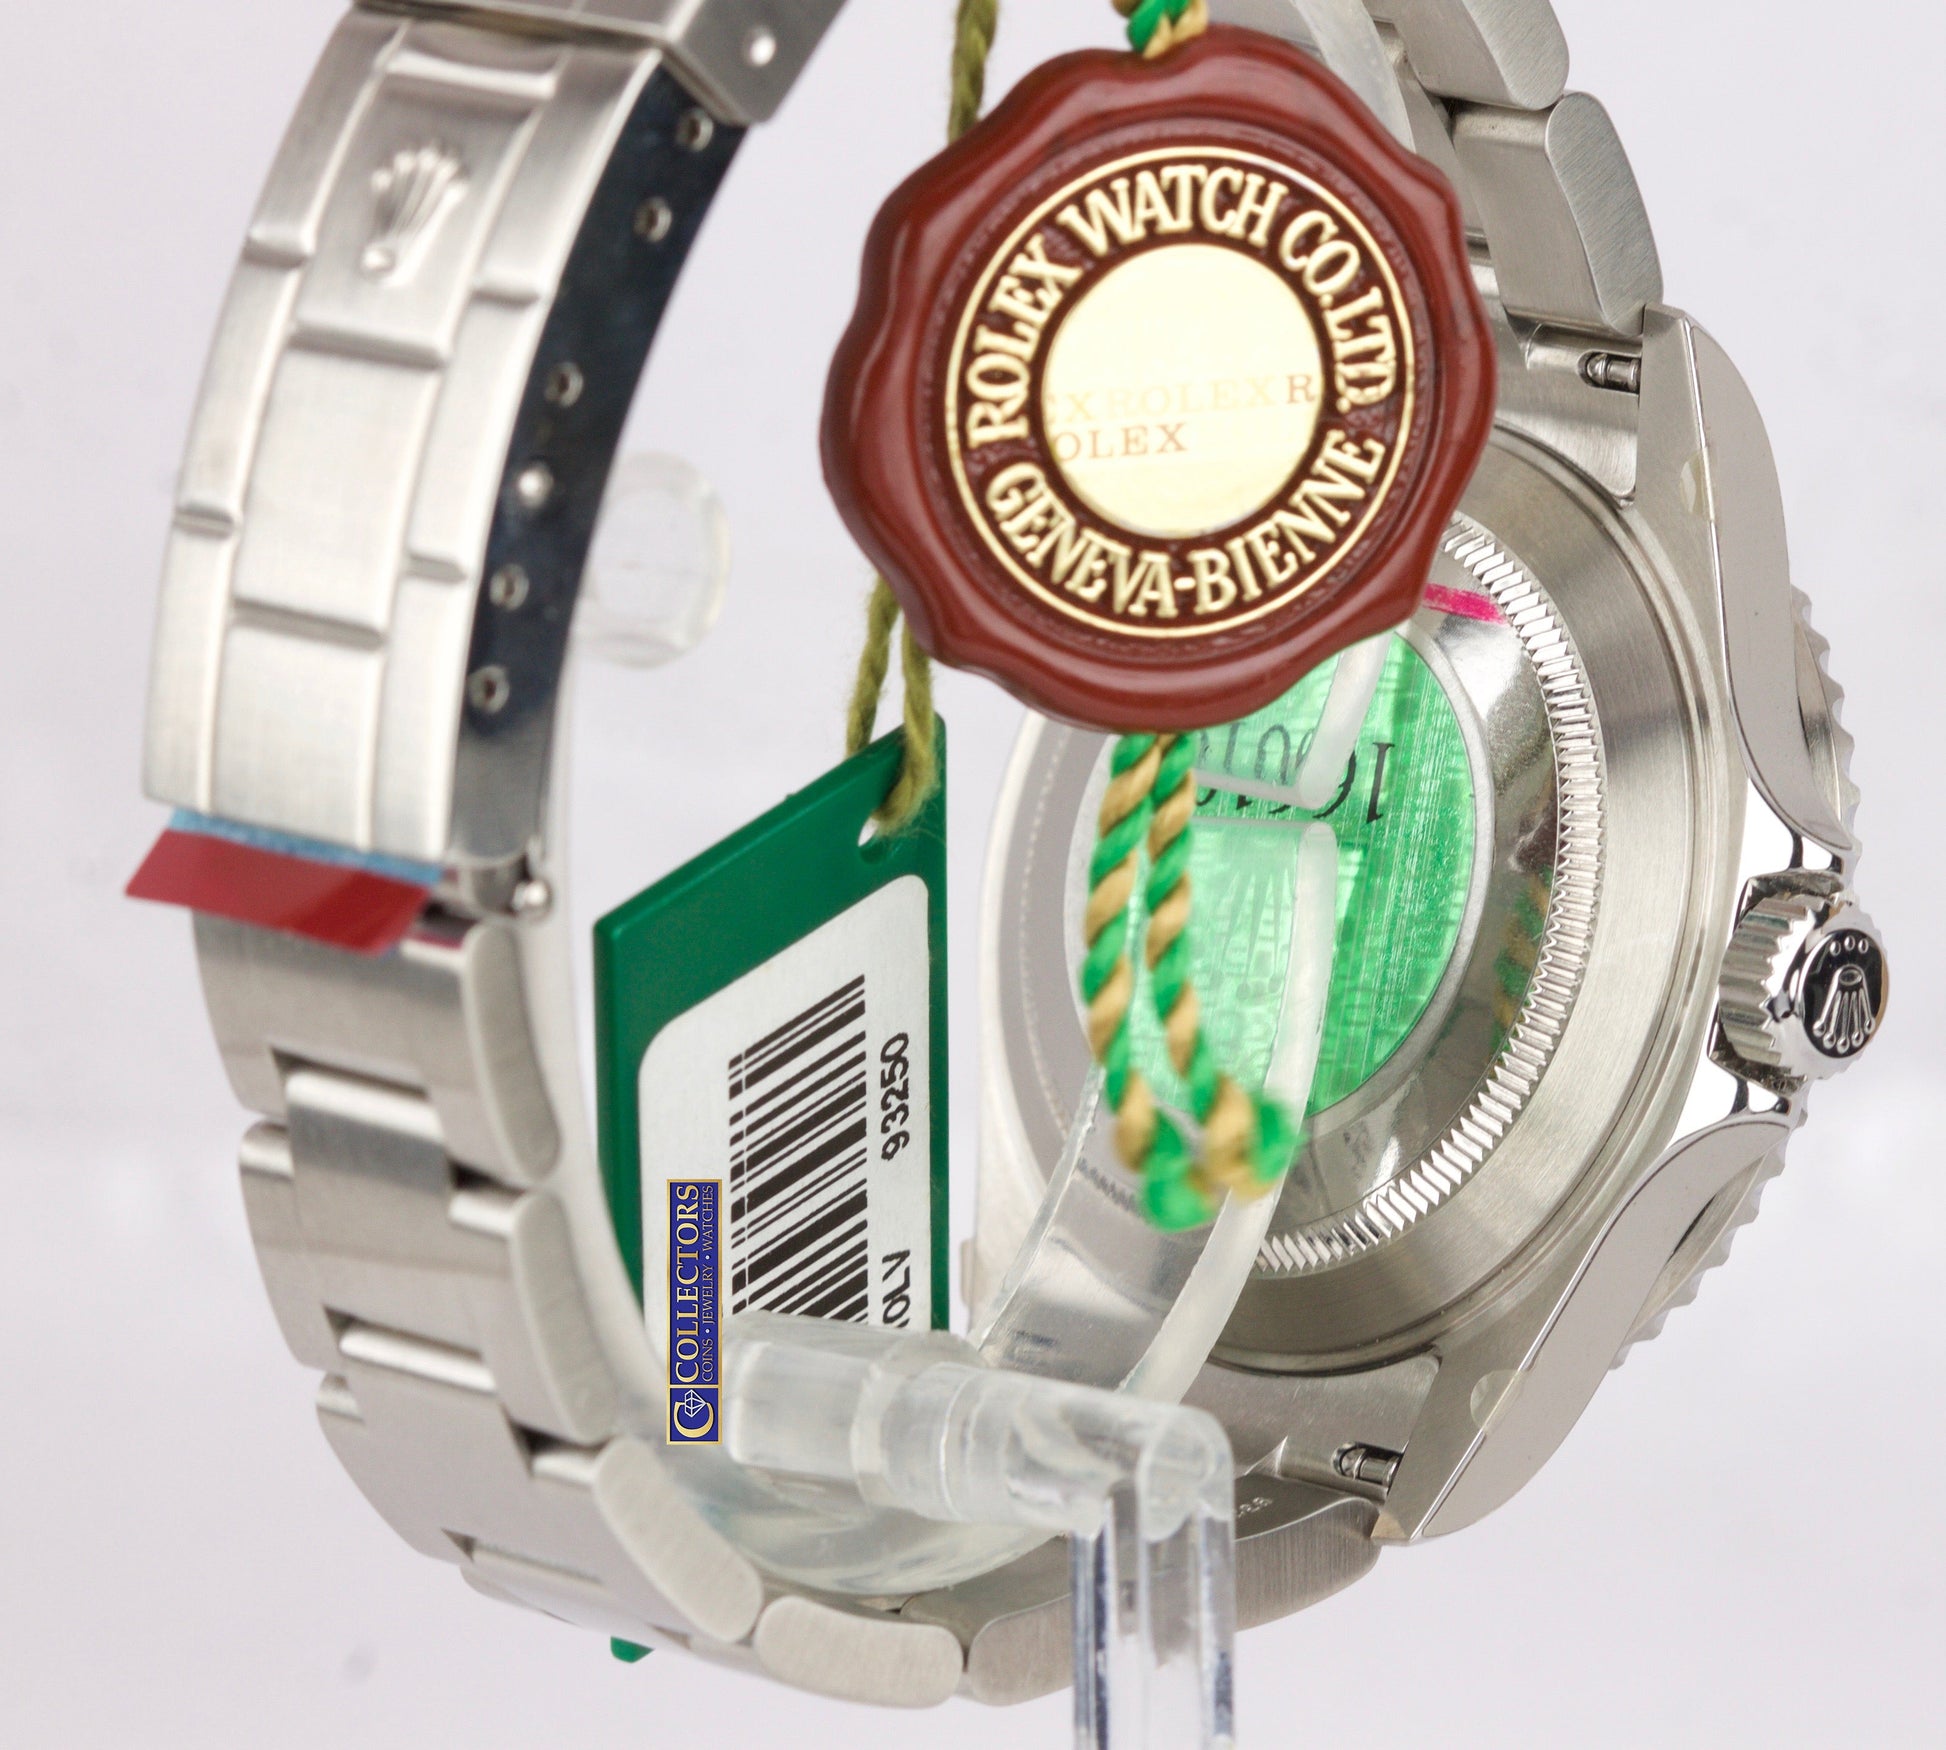 Rolex Submariner Date Green 16610 LV Flat Four – Watch my Watch